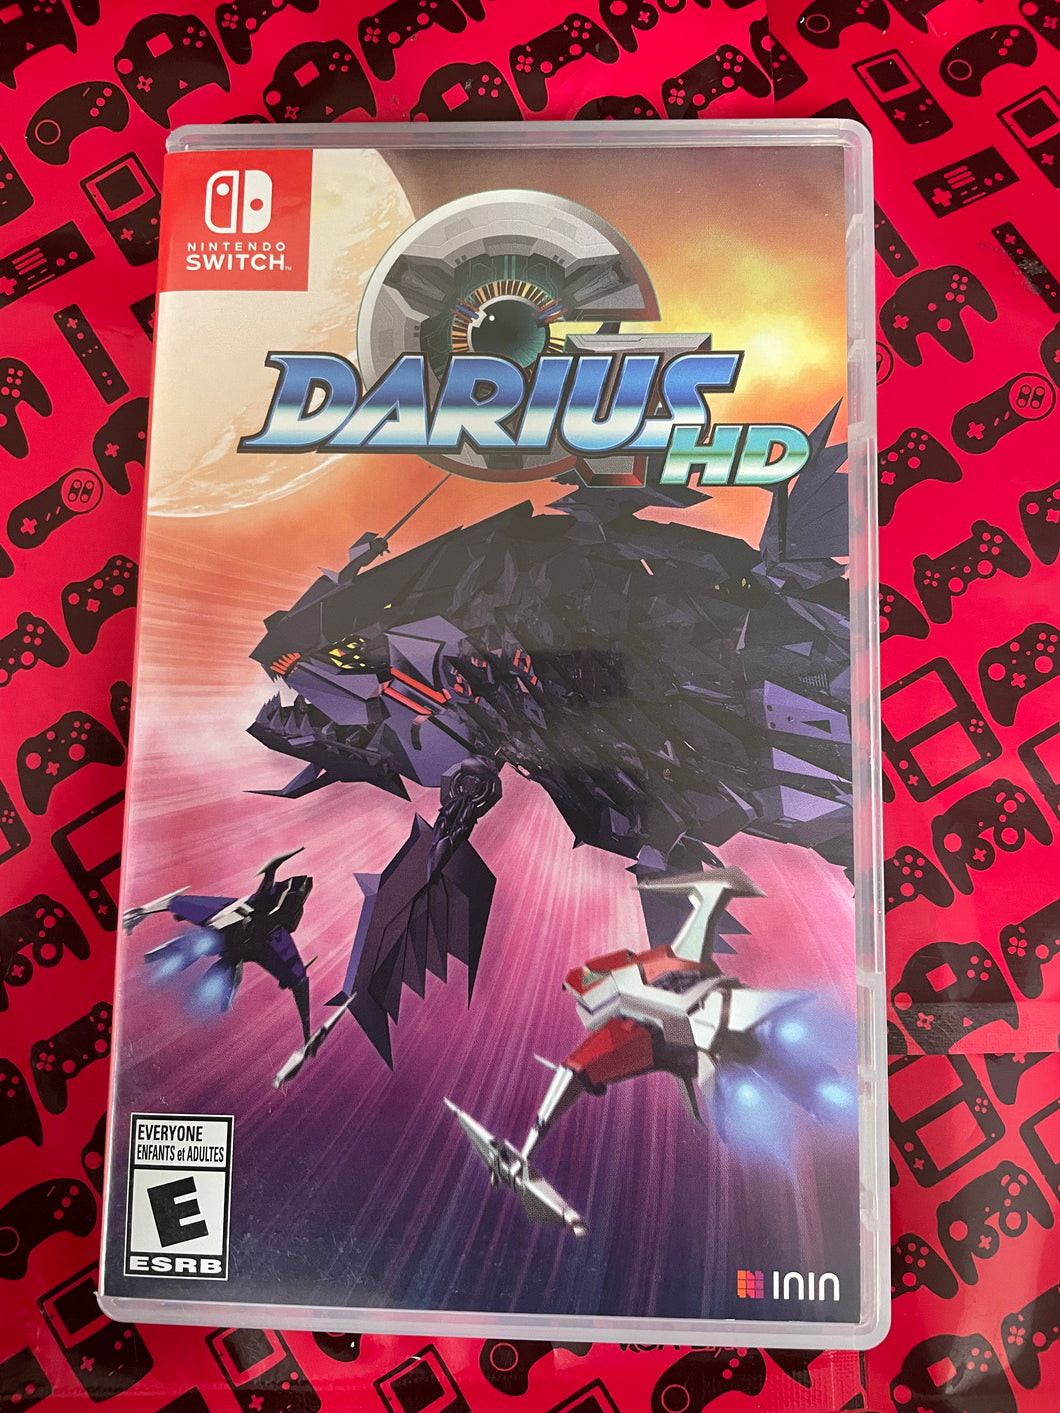 G-Darius HD Nintendo Switch